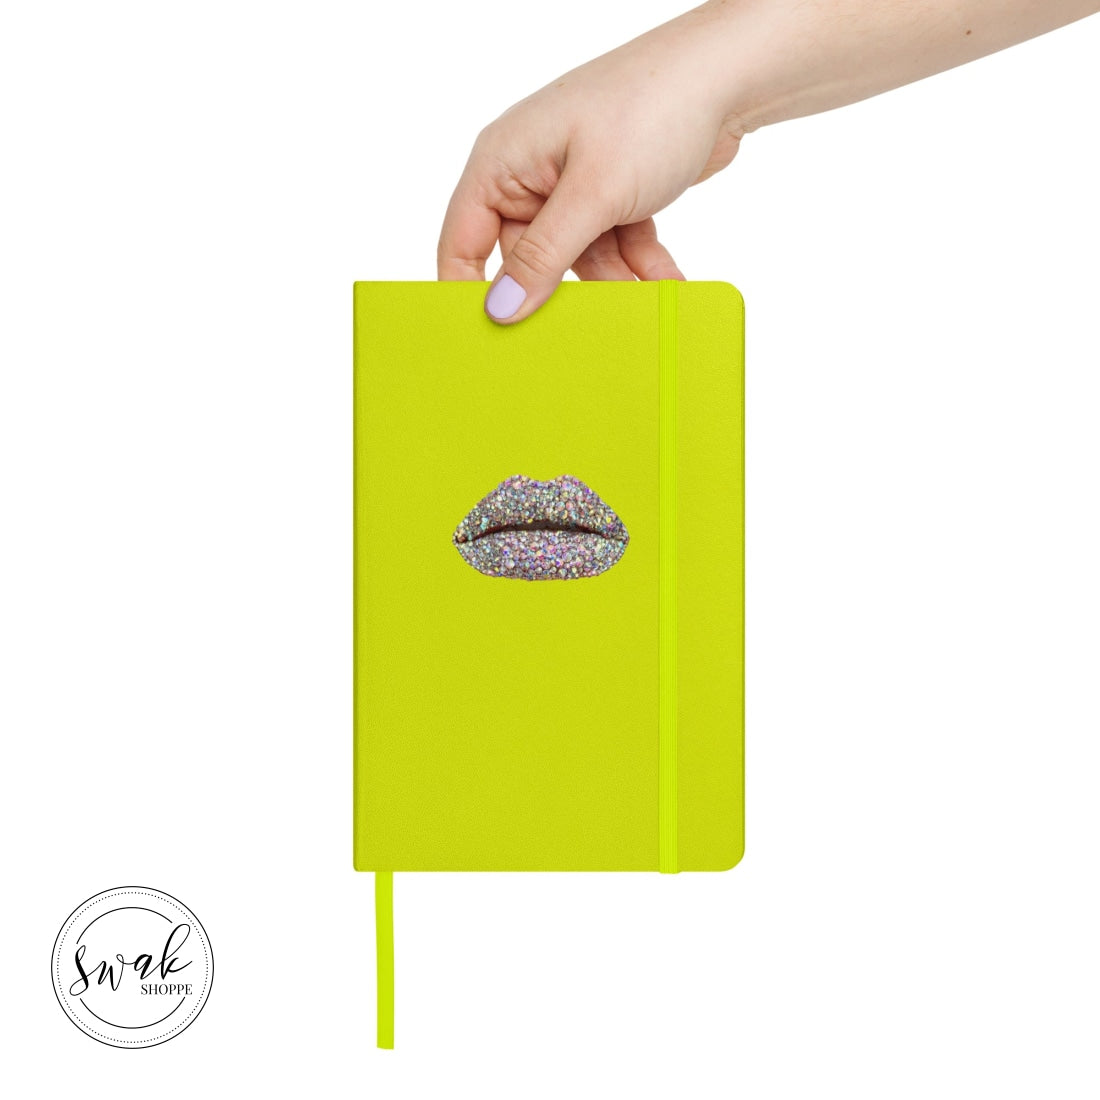 Swak Beauty Rhinestone Crystal Lip Art Hardcover Bound Notebook